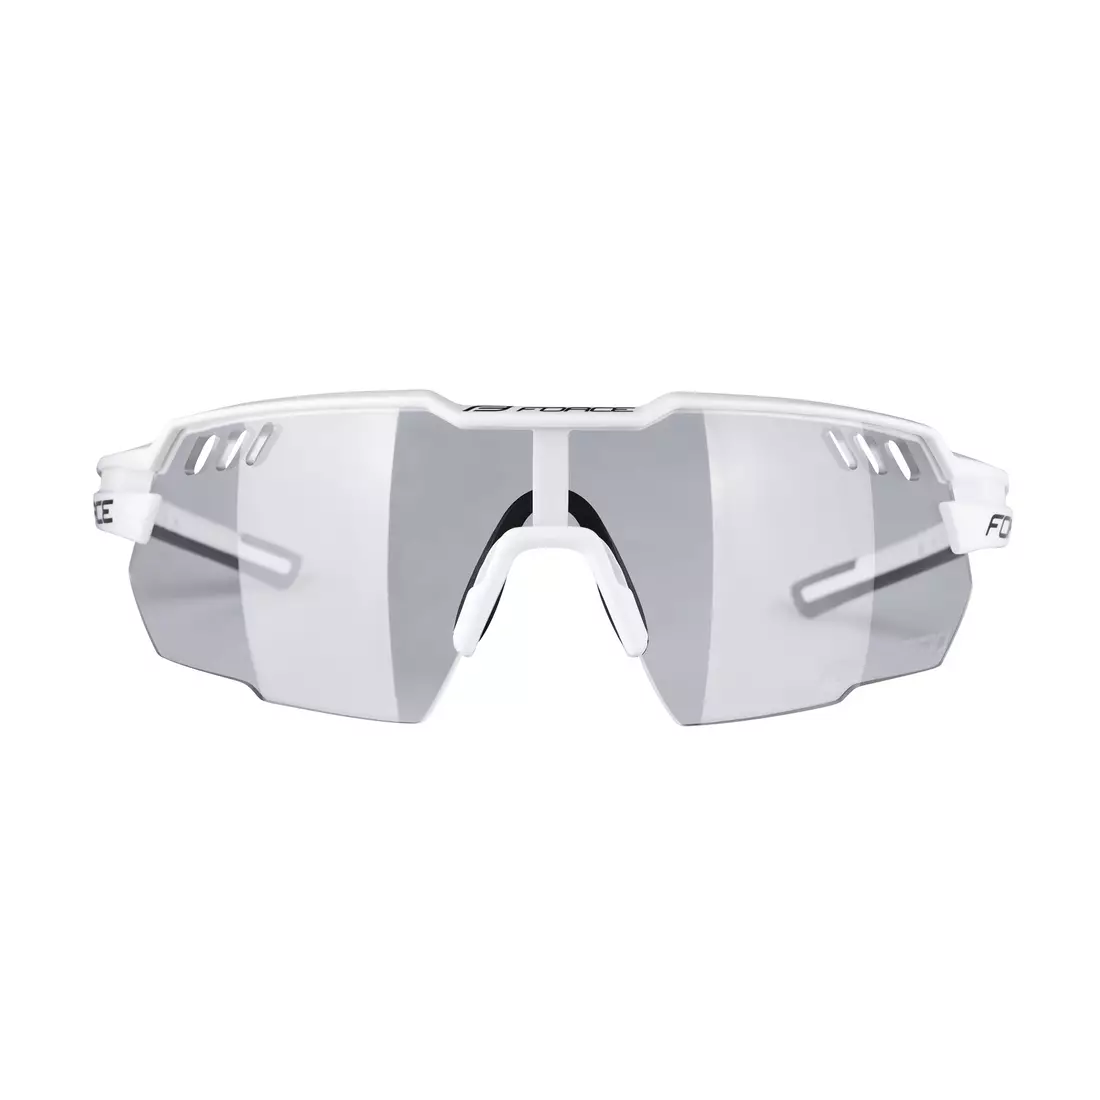 FORCE sportbrille AMOLEDO Photochrom, schwarz und grau, 910882